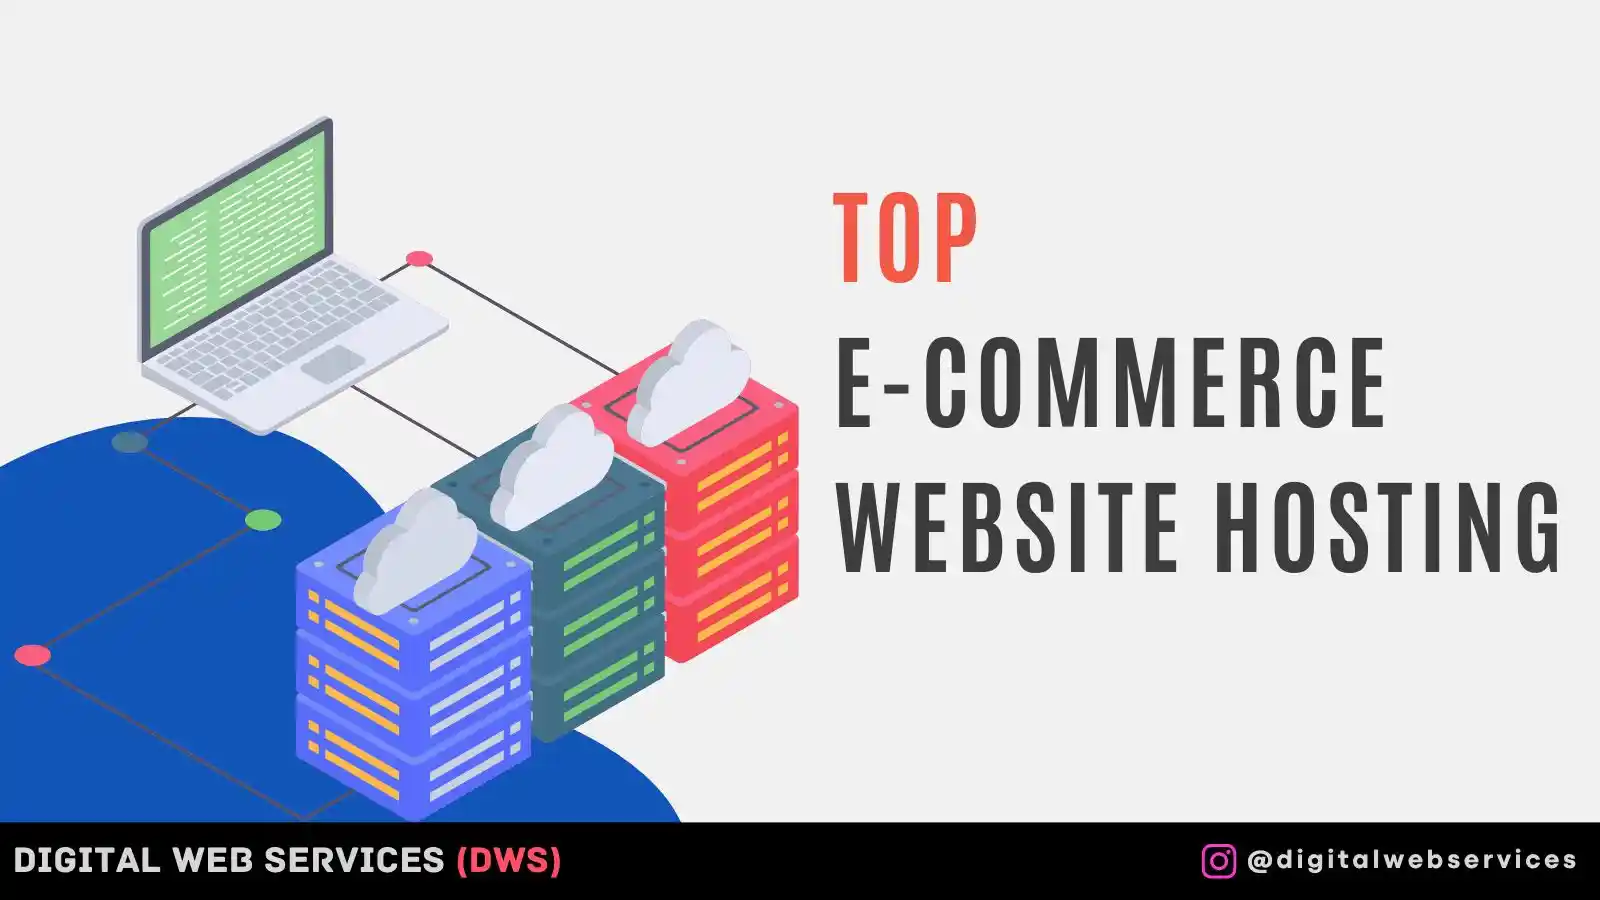 Top 5 Web Hosting Companies for E-commerce Website